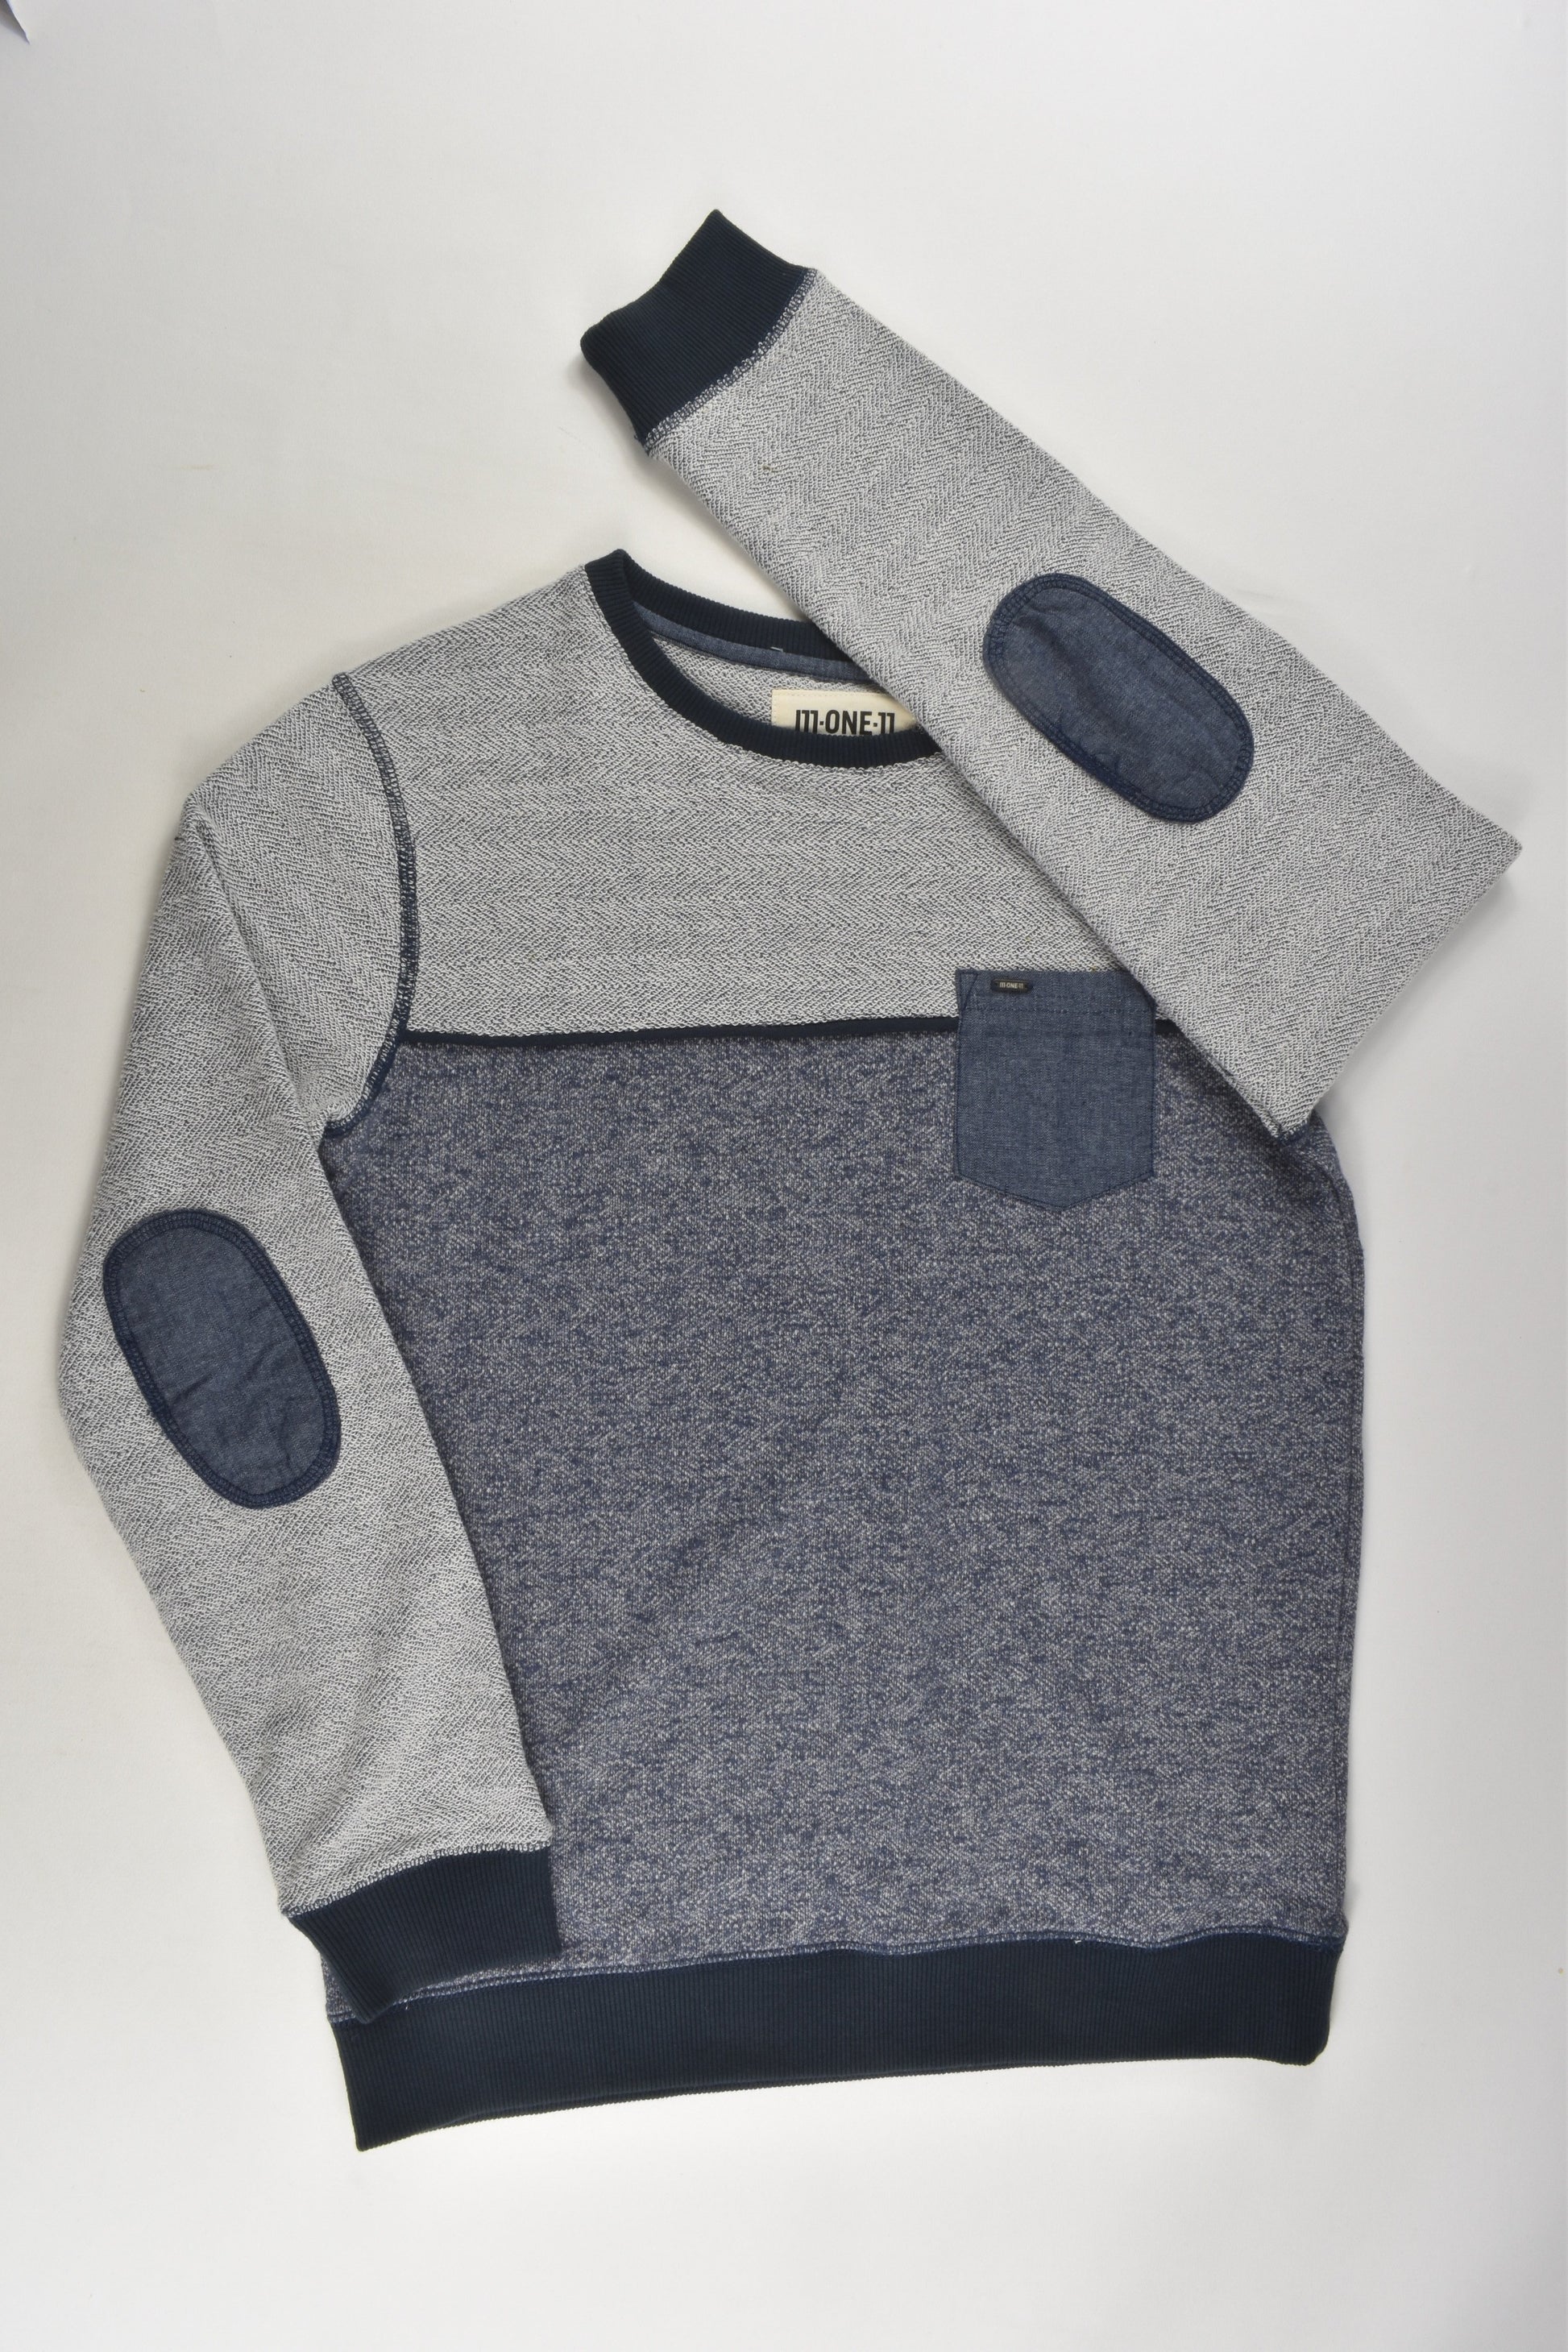 I11-ONE-11 Size 12 Sweater